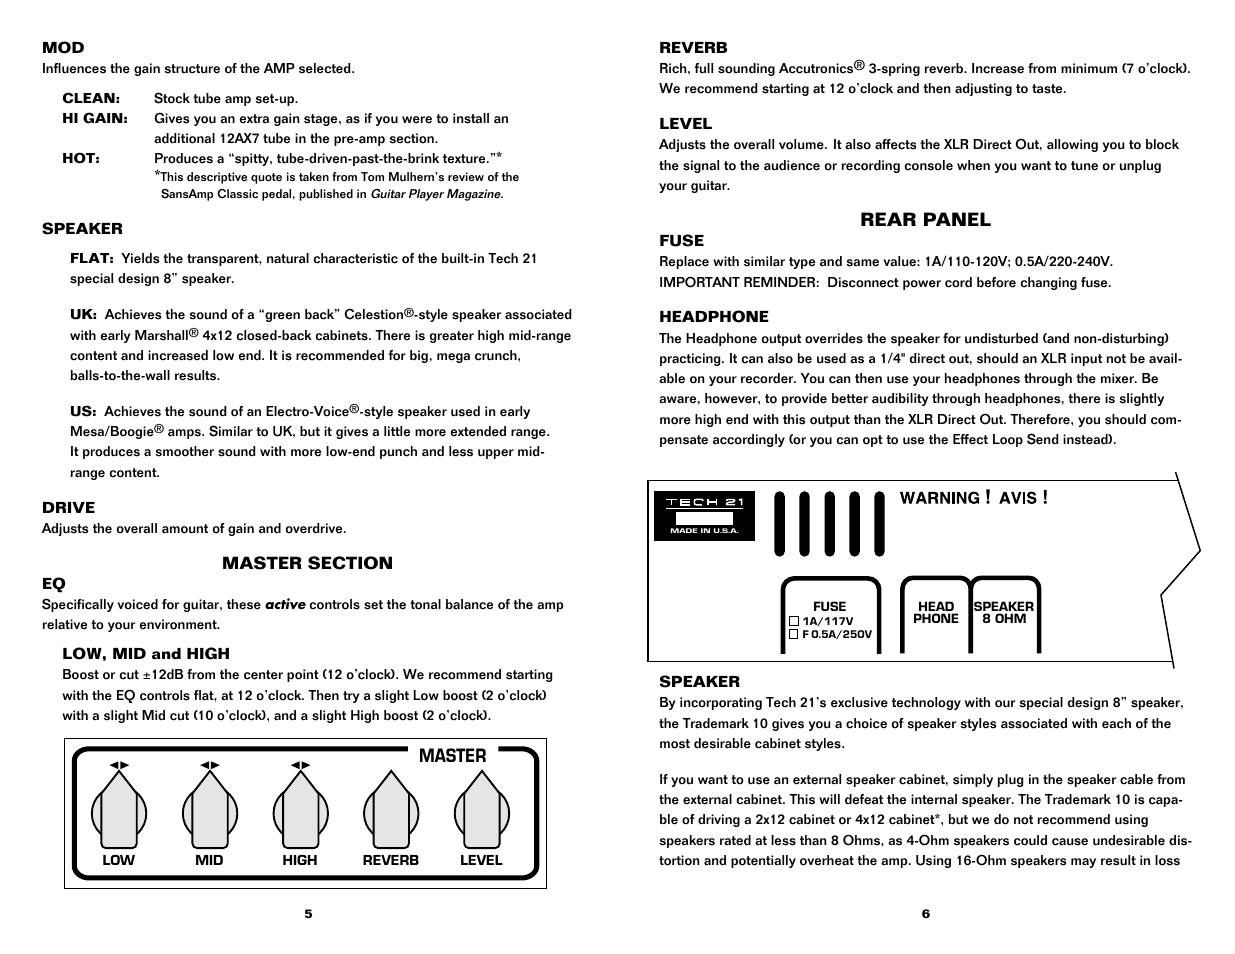 Master Rear Panel Tech 21 Trademark 10 User Manual Page 4 8